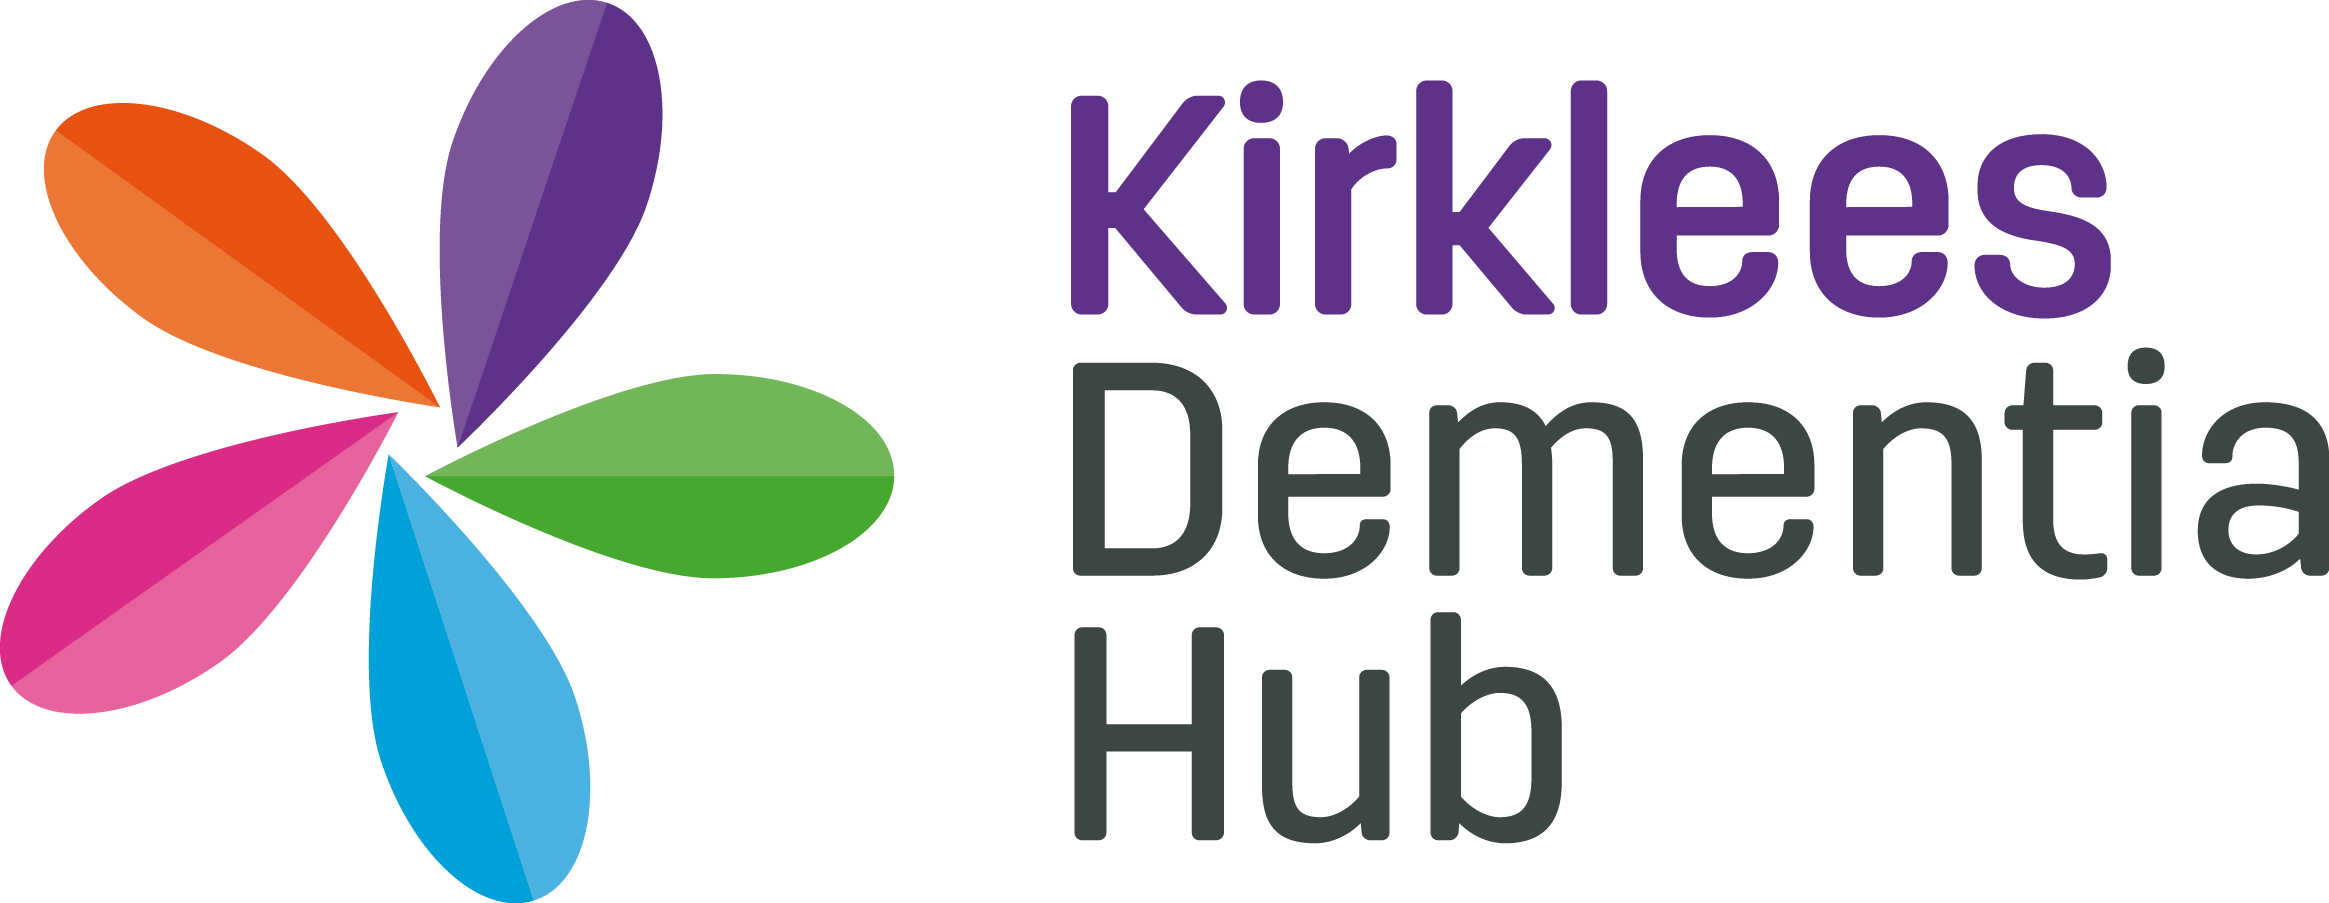 Kirklees dementia hub logo